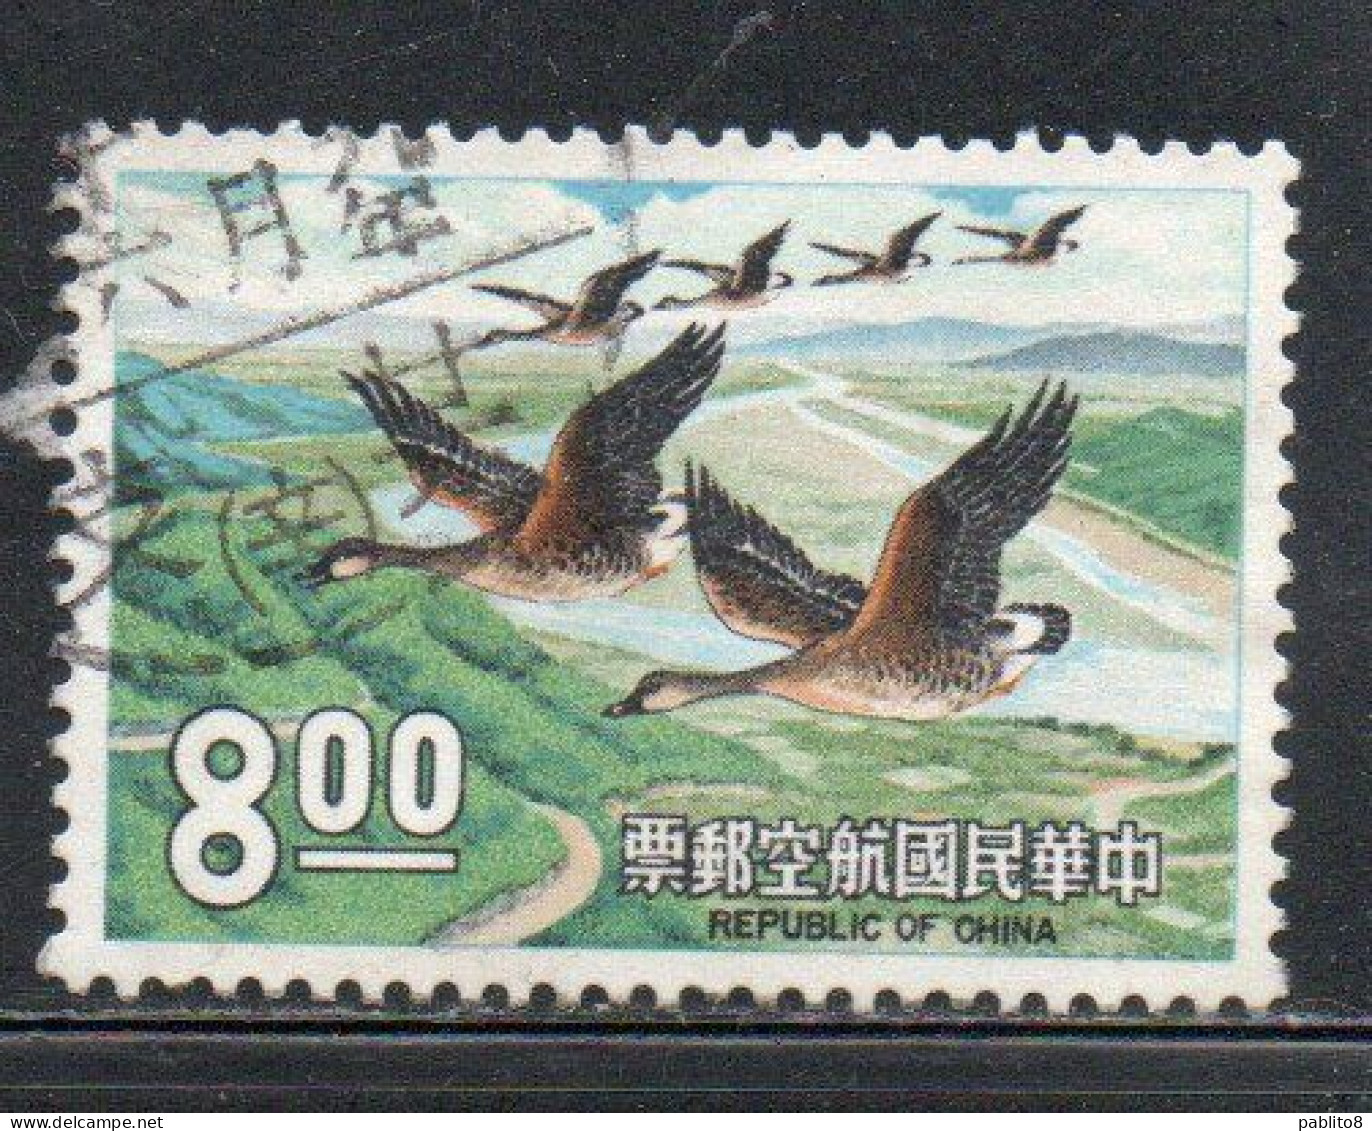 CHINA REPUBLIC CINA TAIWAN FORMOSA 1969 AIR POST MAIL AIRMAIL BIRD FAUNA BIRDS WILD GEESE FLIGT LAND 8$ USED USATO - Luftpost